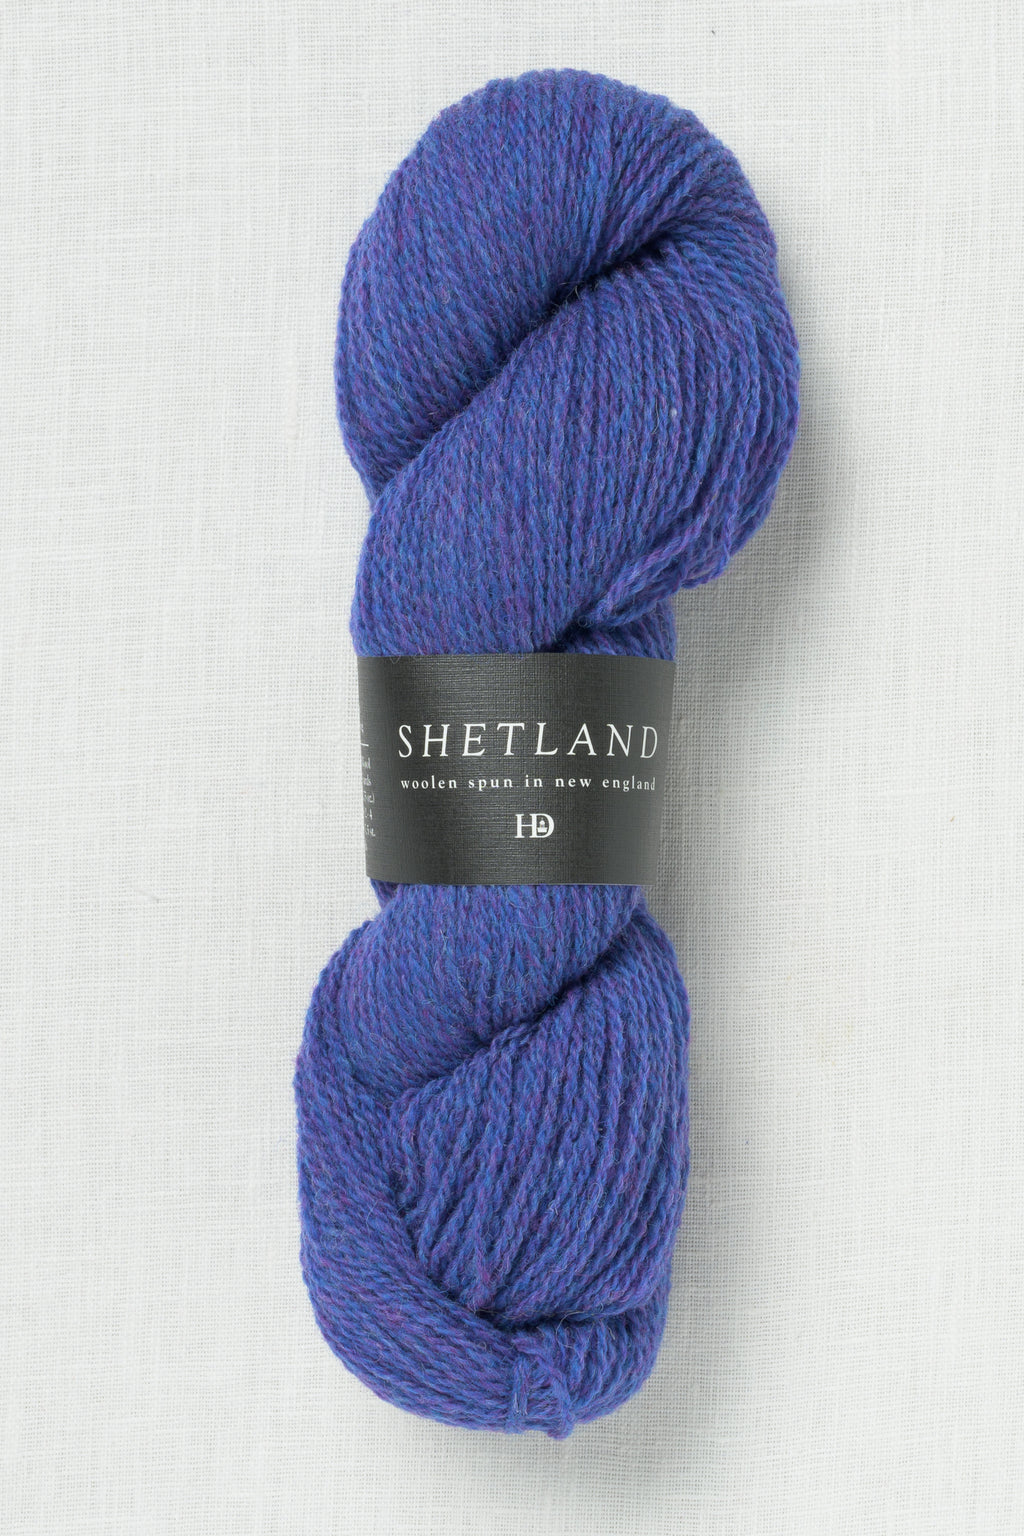 Harrisville Designs Shetland 28 Iris